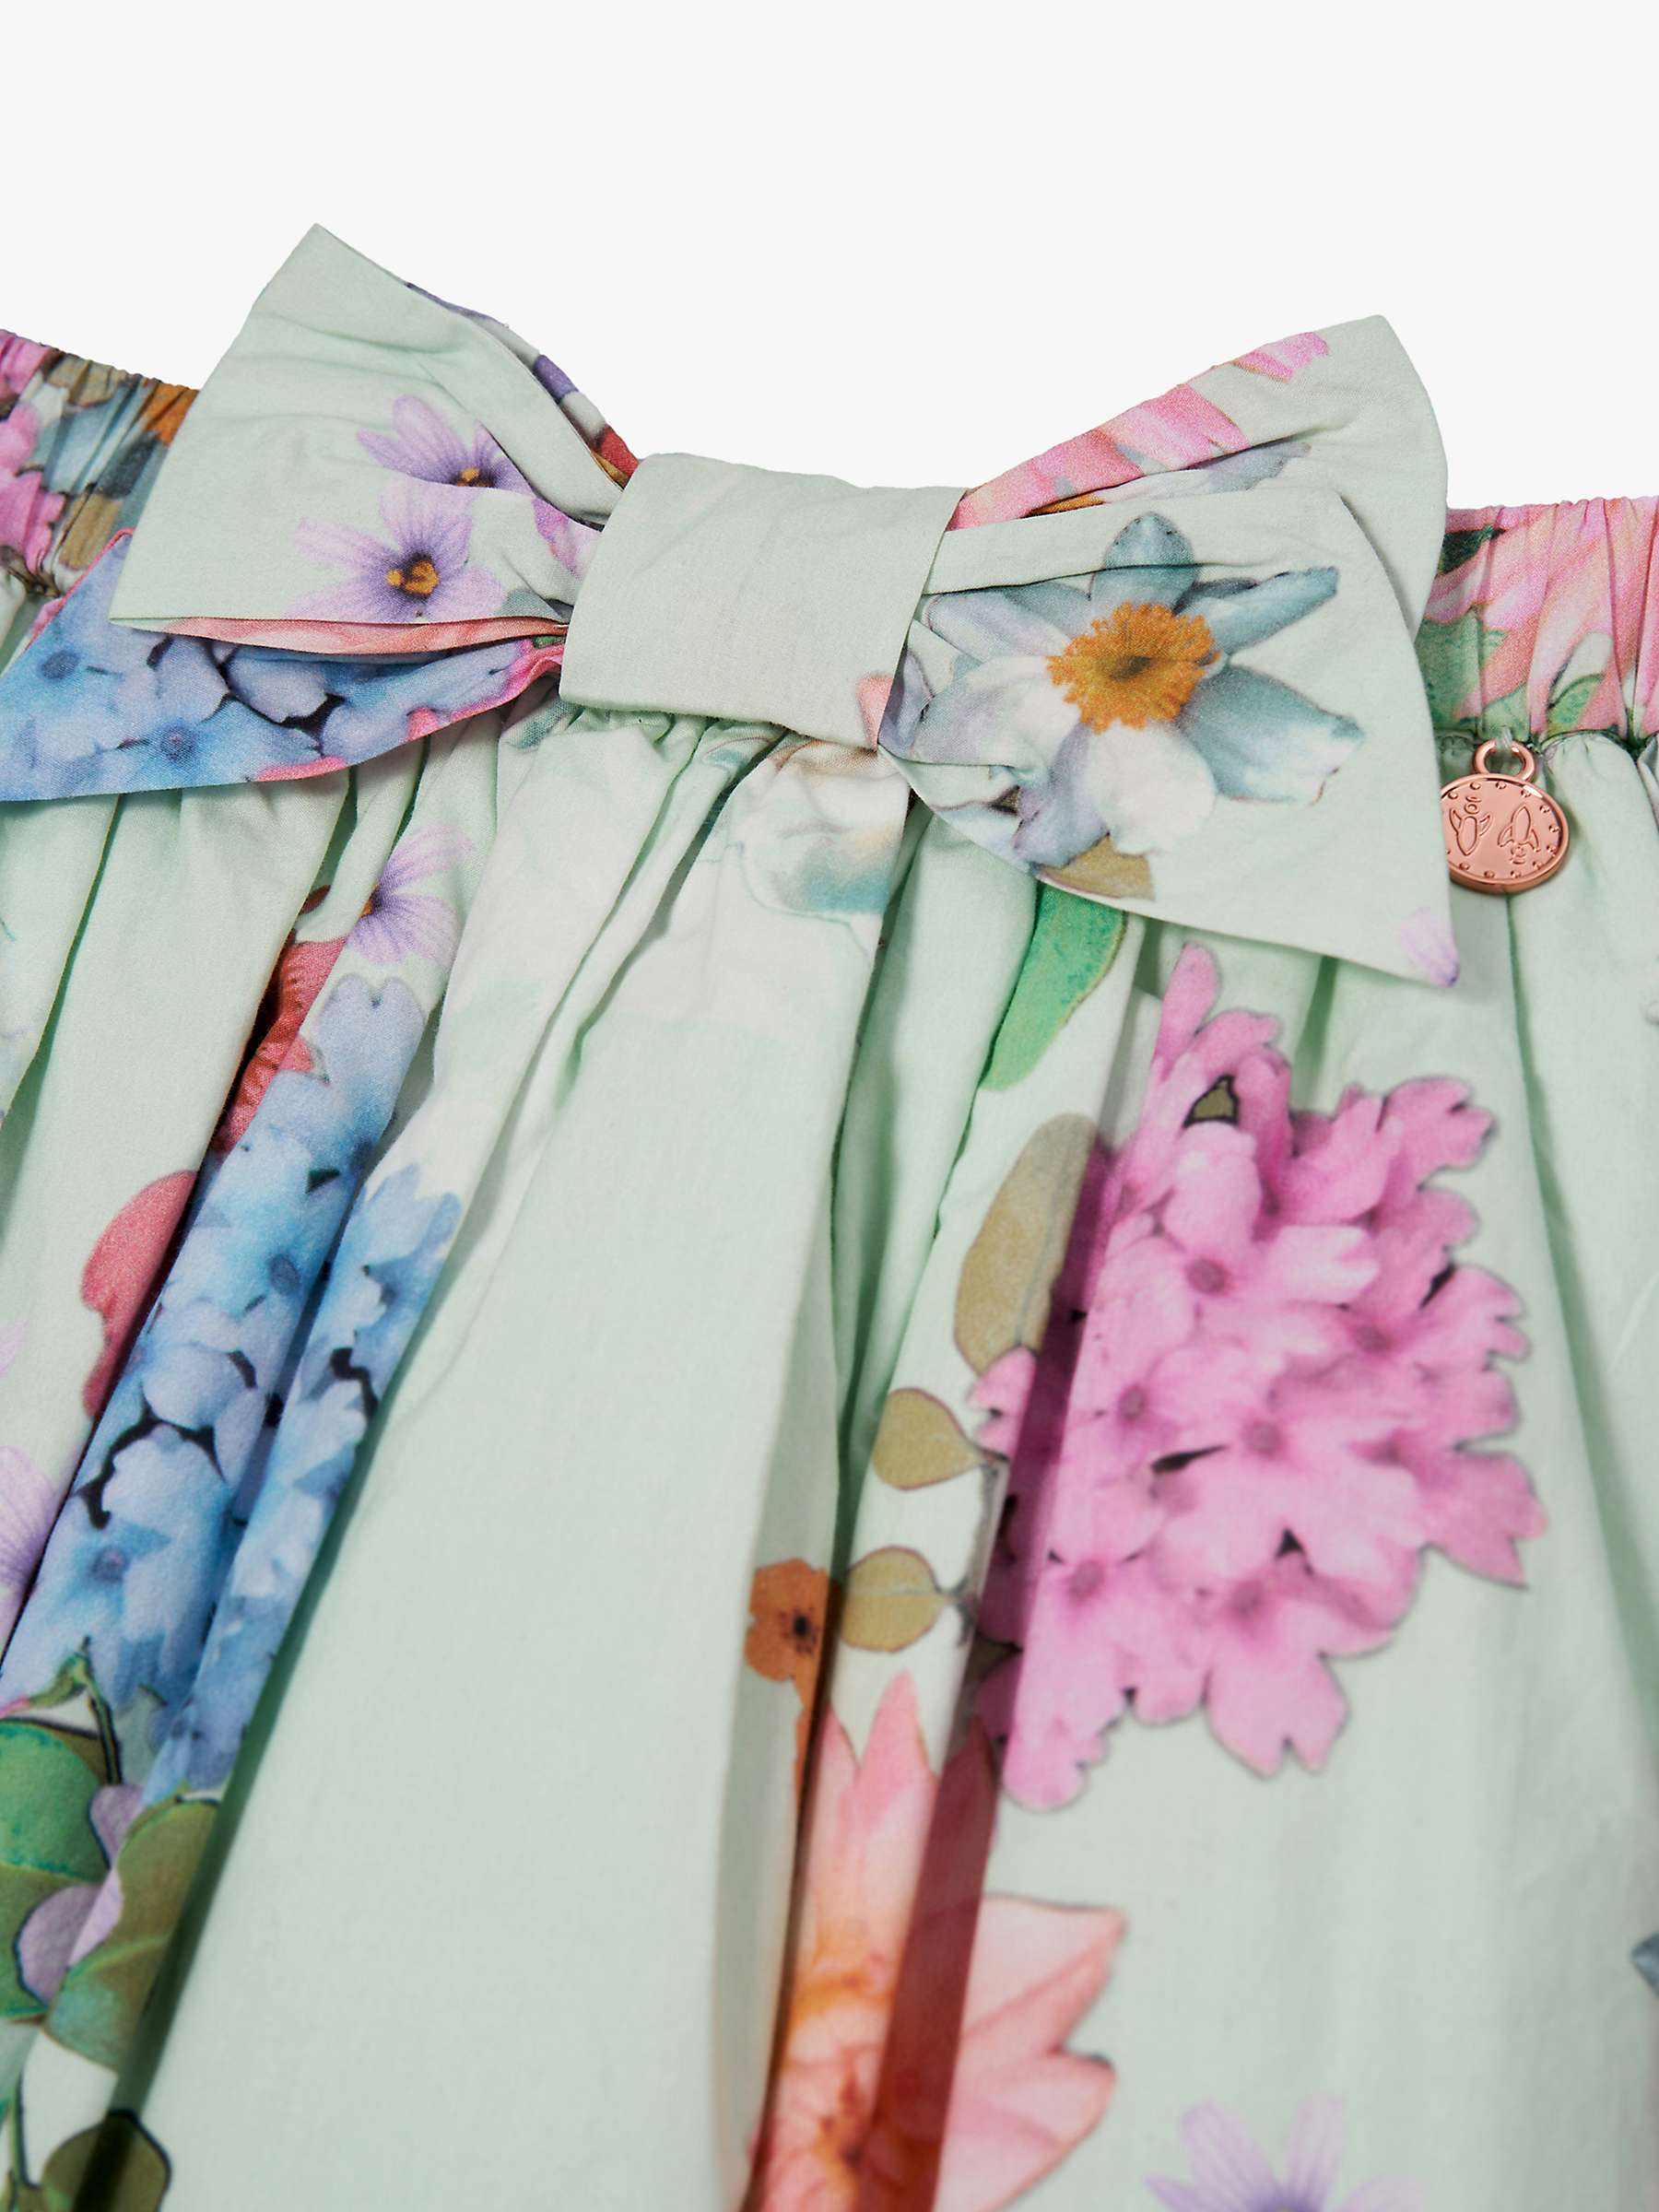 Buy Angel & Rocket Kids' Darcy Petal Cut Floral Print Tutu Skirt, Mint Online at johnlewis.com